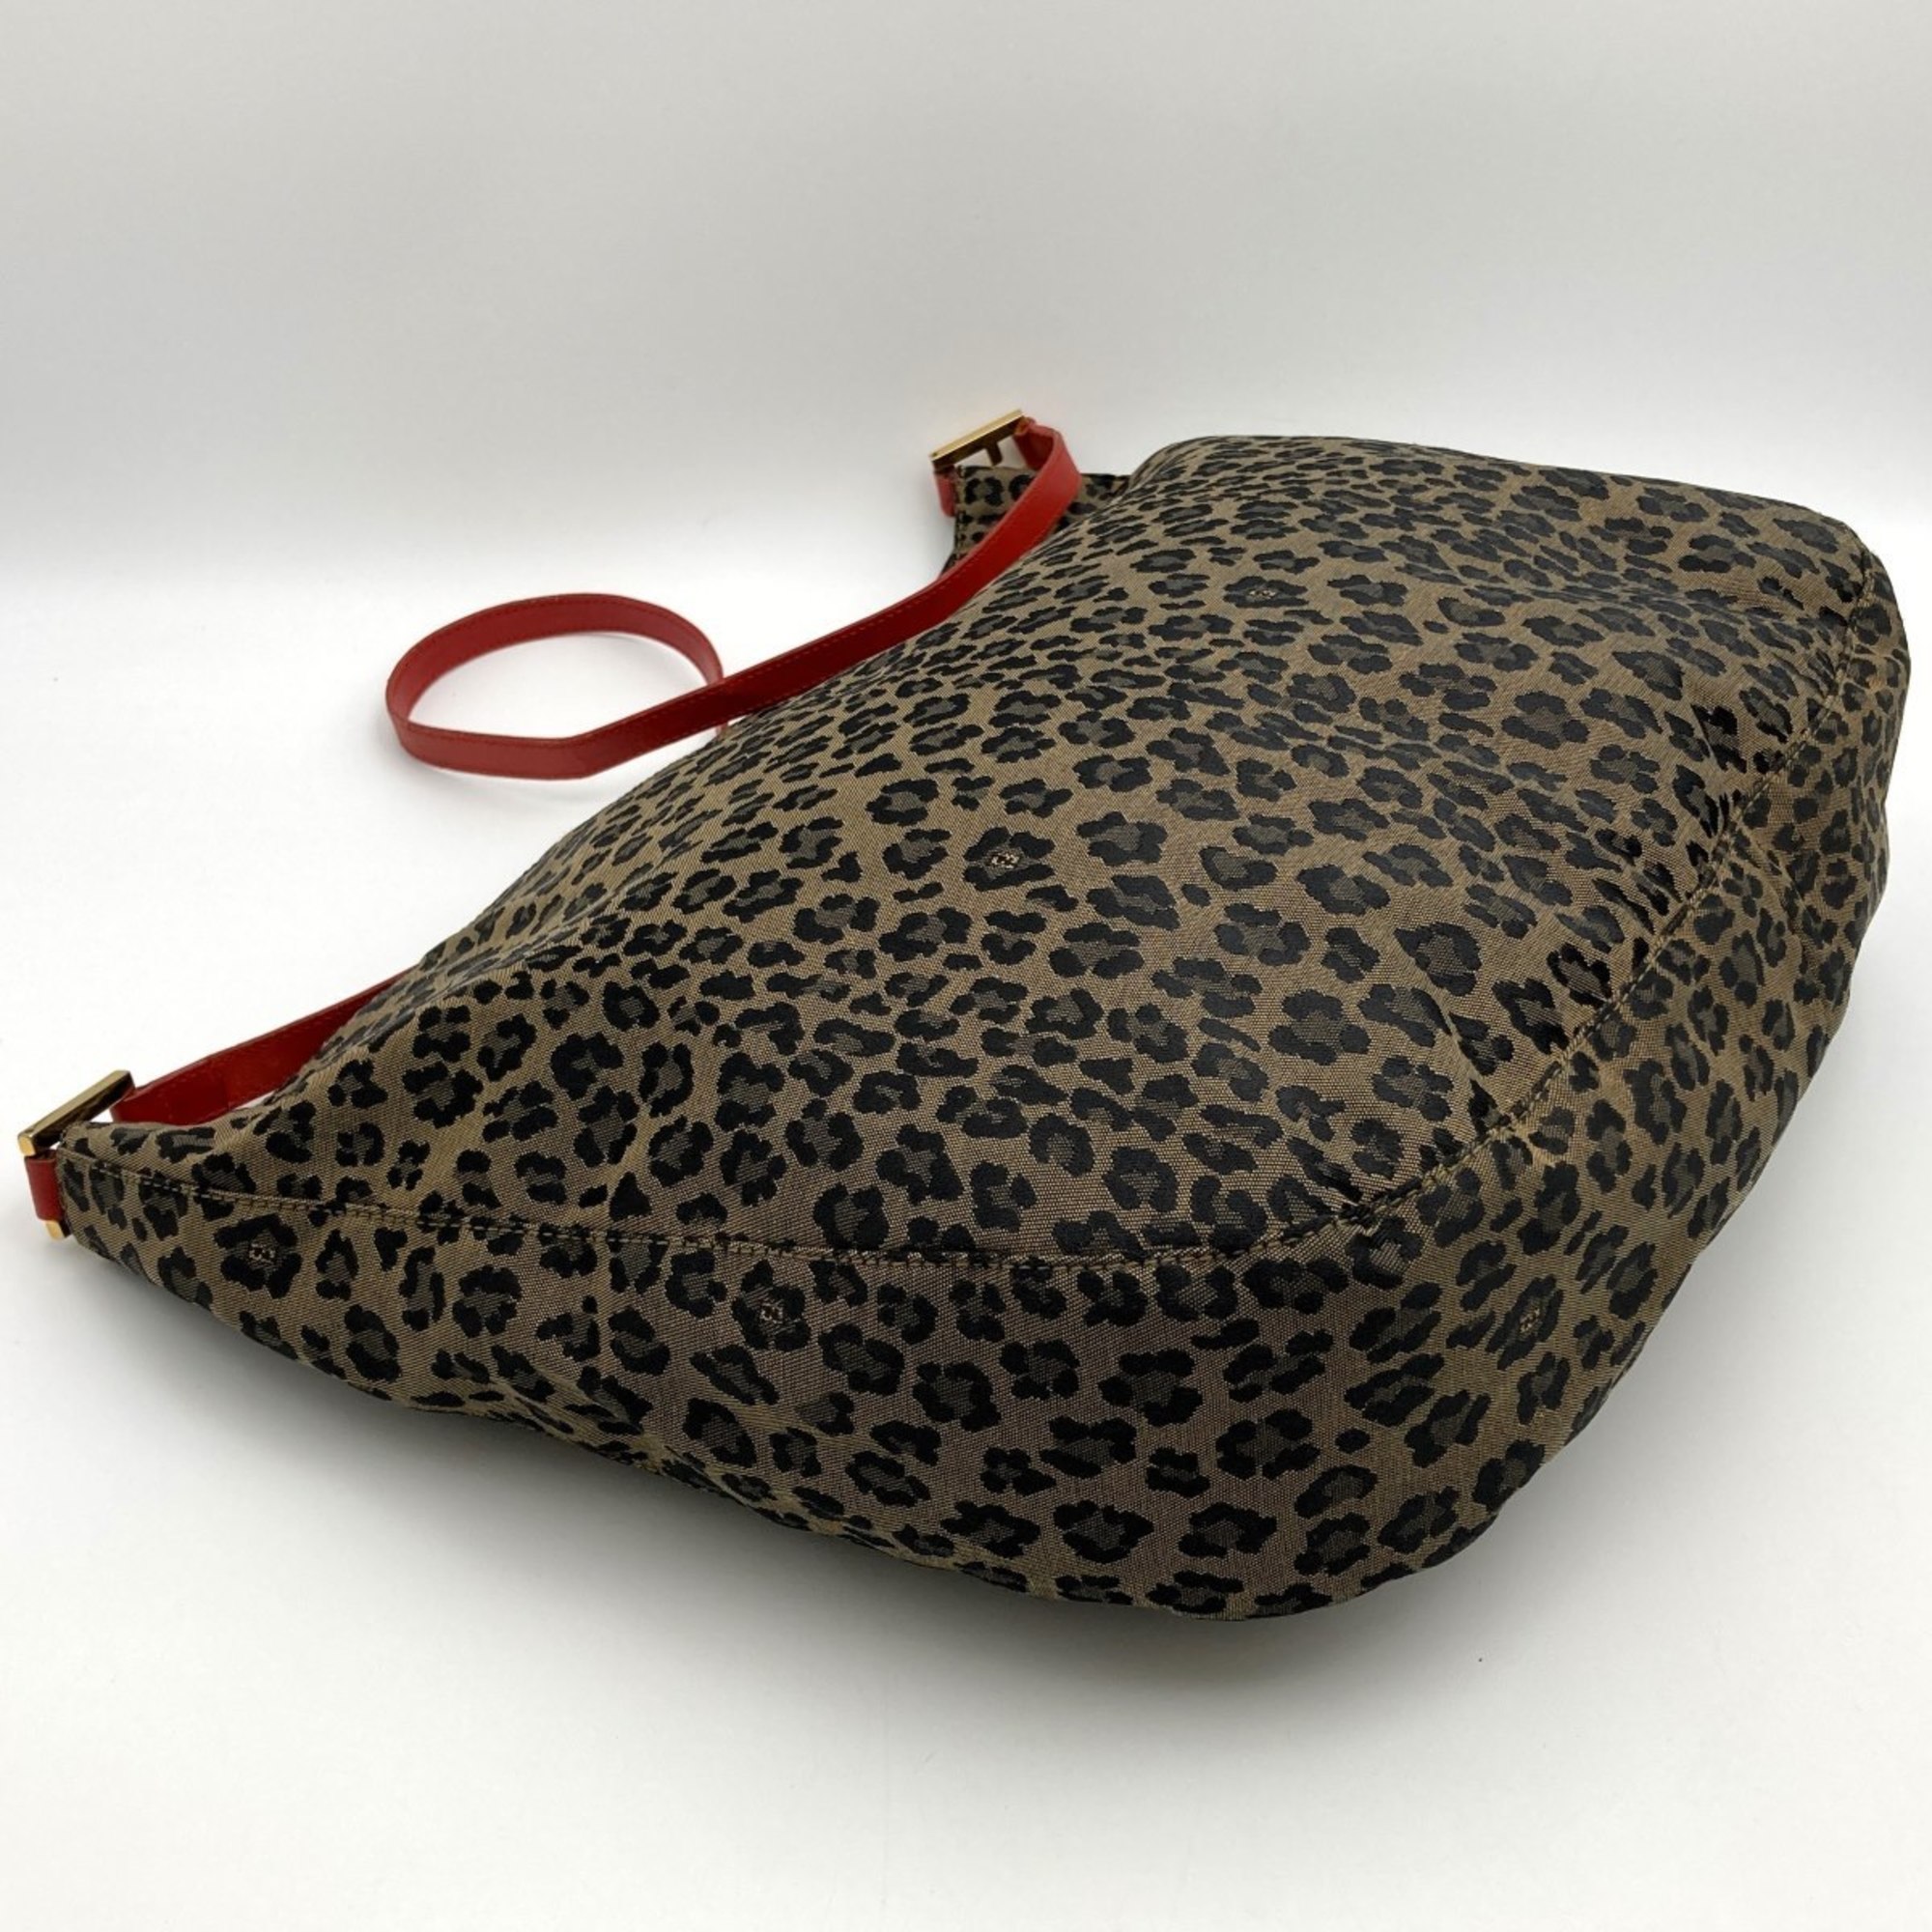 FENDI shoulder bag leopard print all over pattern brown red canvas ladies men USED